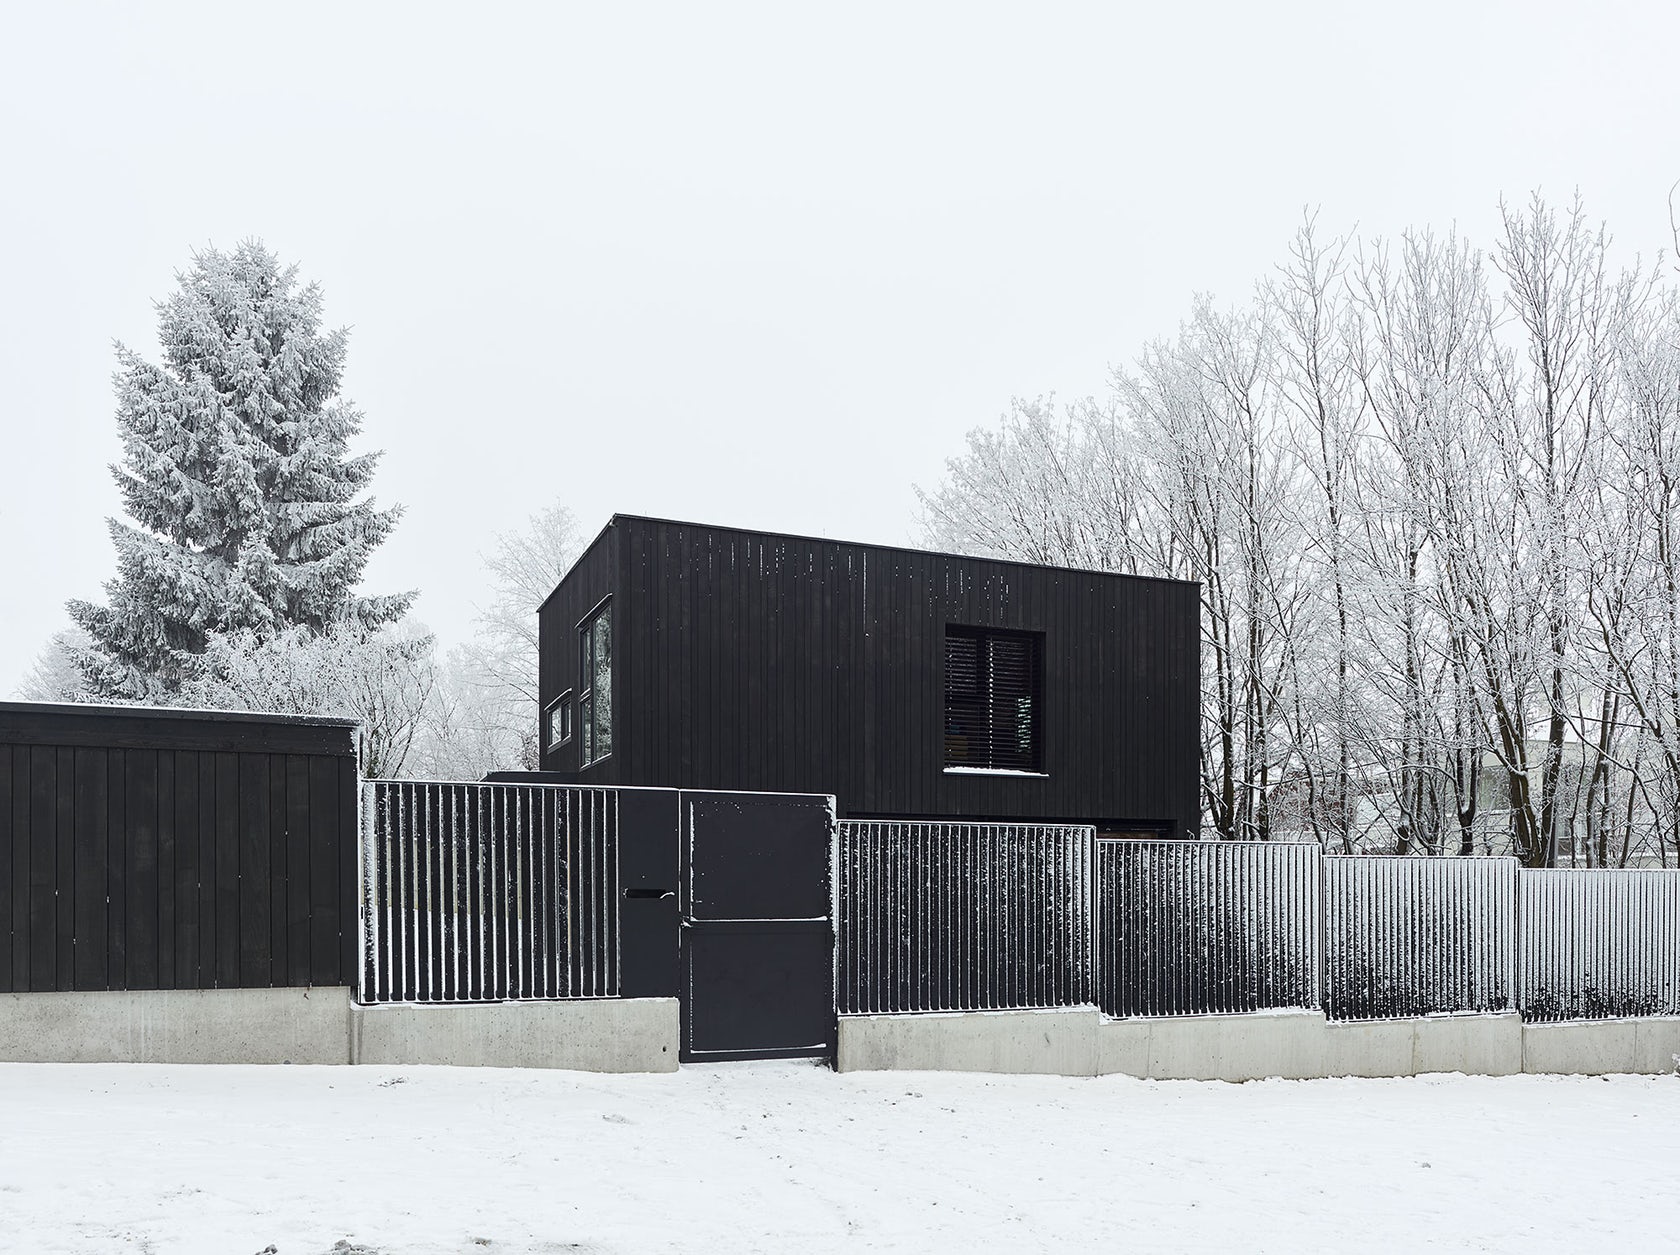 The Small Black by Pichler Architecture